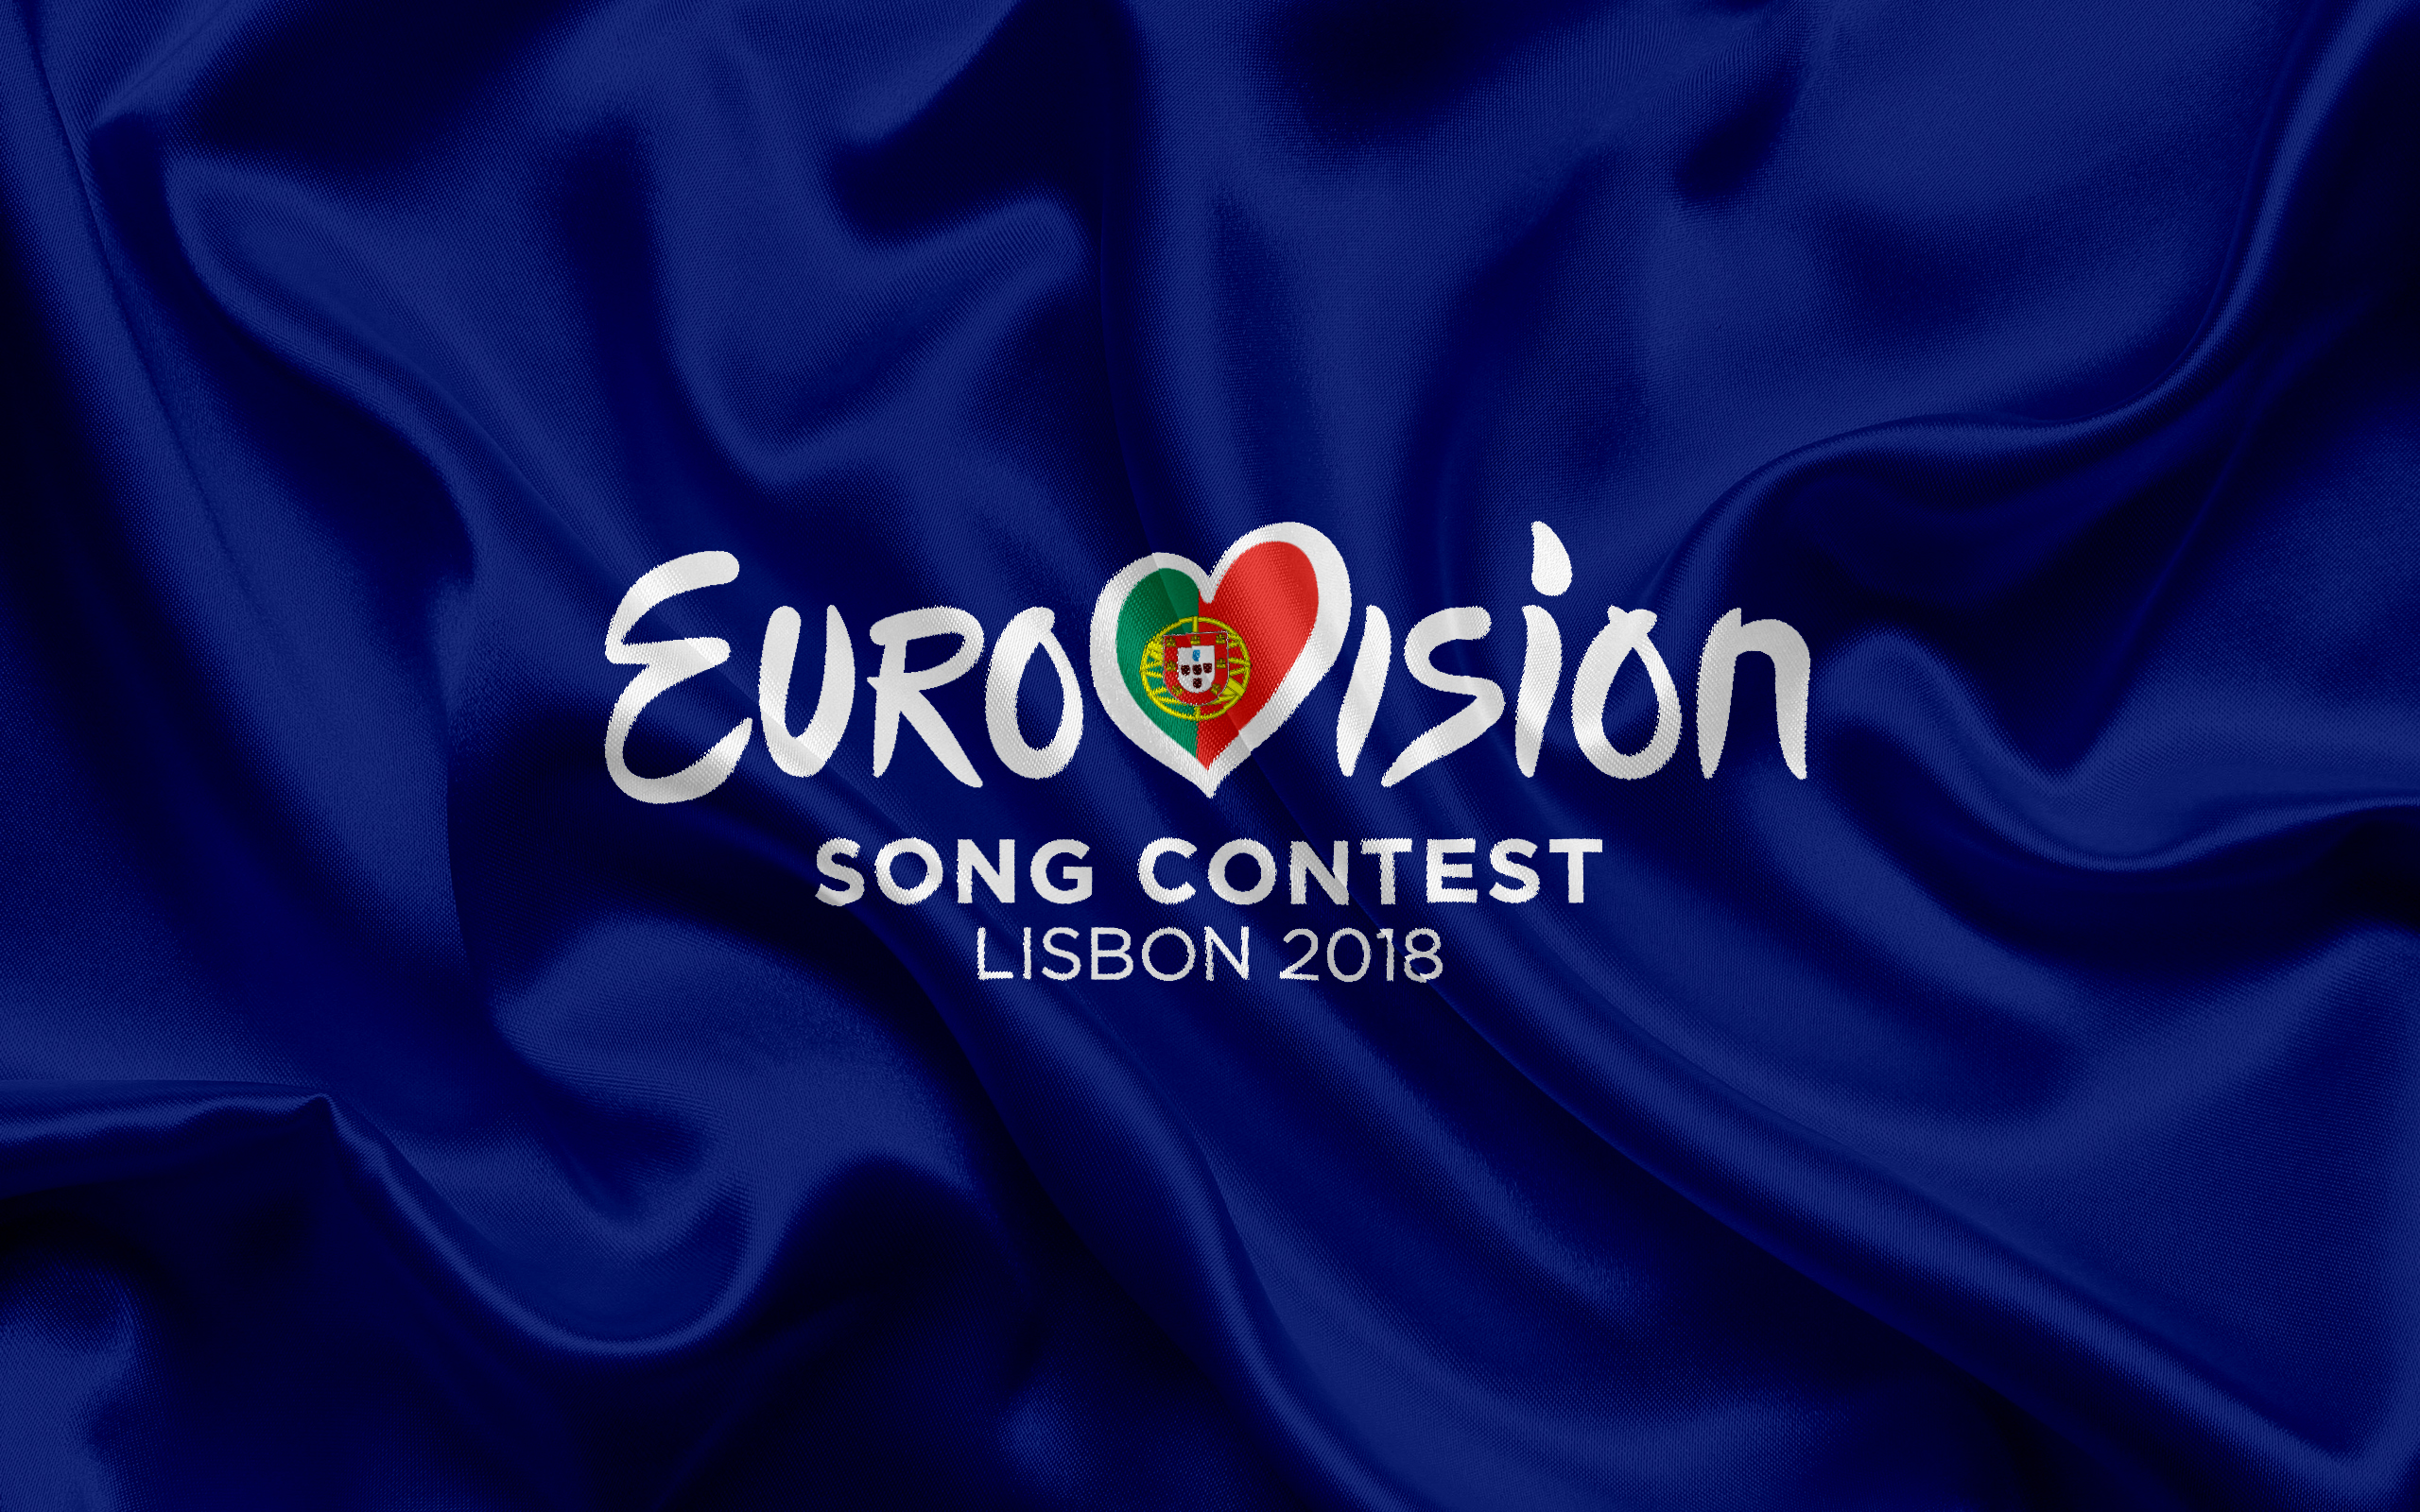 Eurovision Logo In Lisbon On A Blue Background Desktop